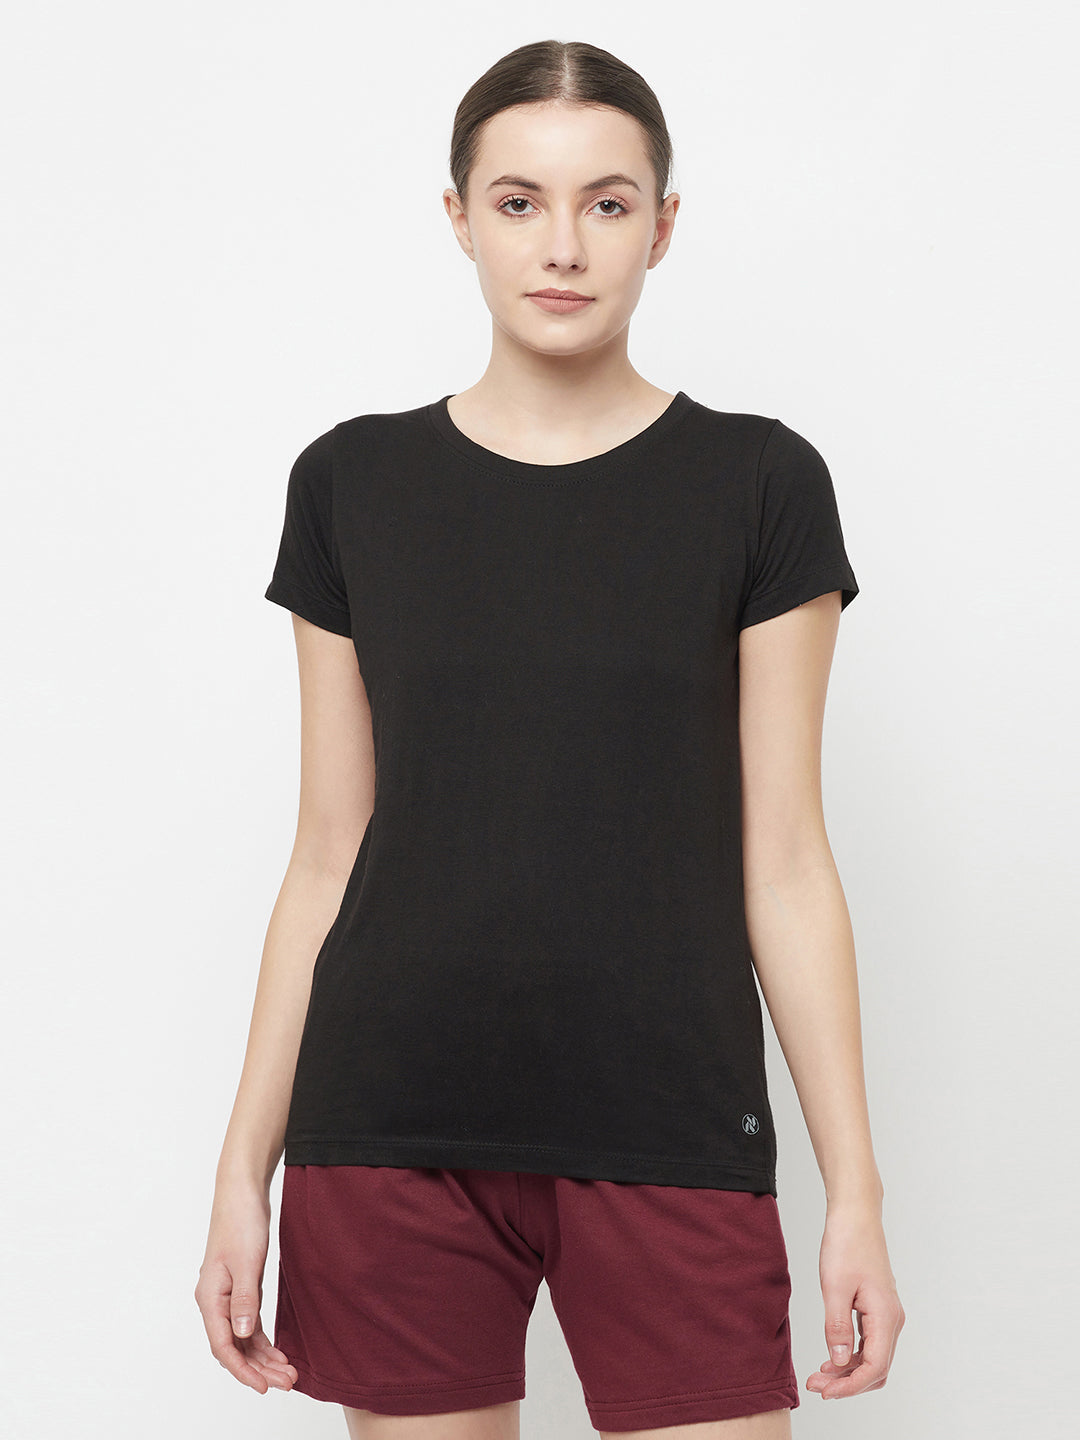 Slim Fit Premium Cotton Tshirts (Pack of 3- Black, Orange, Pink)